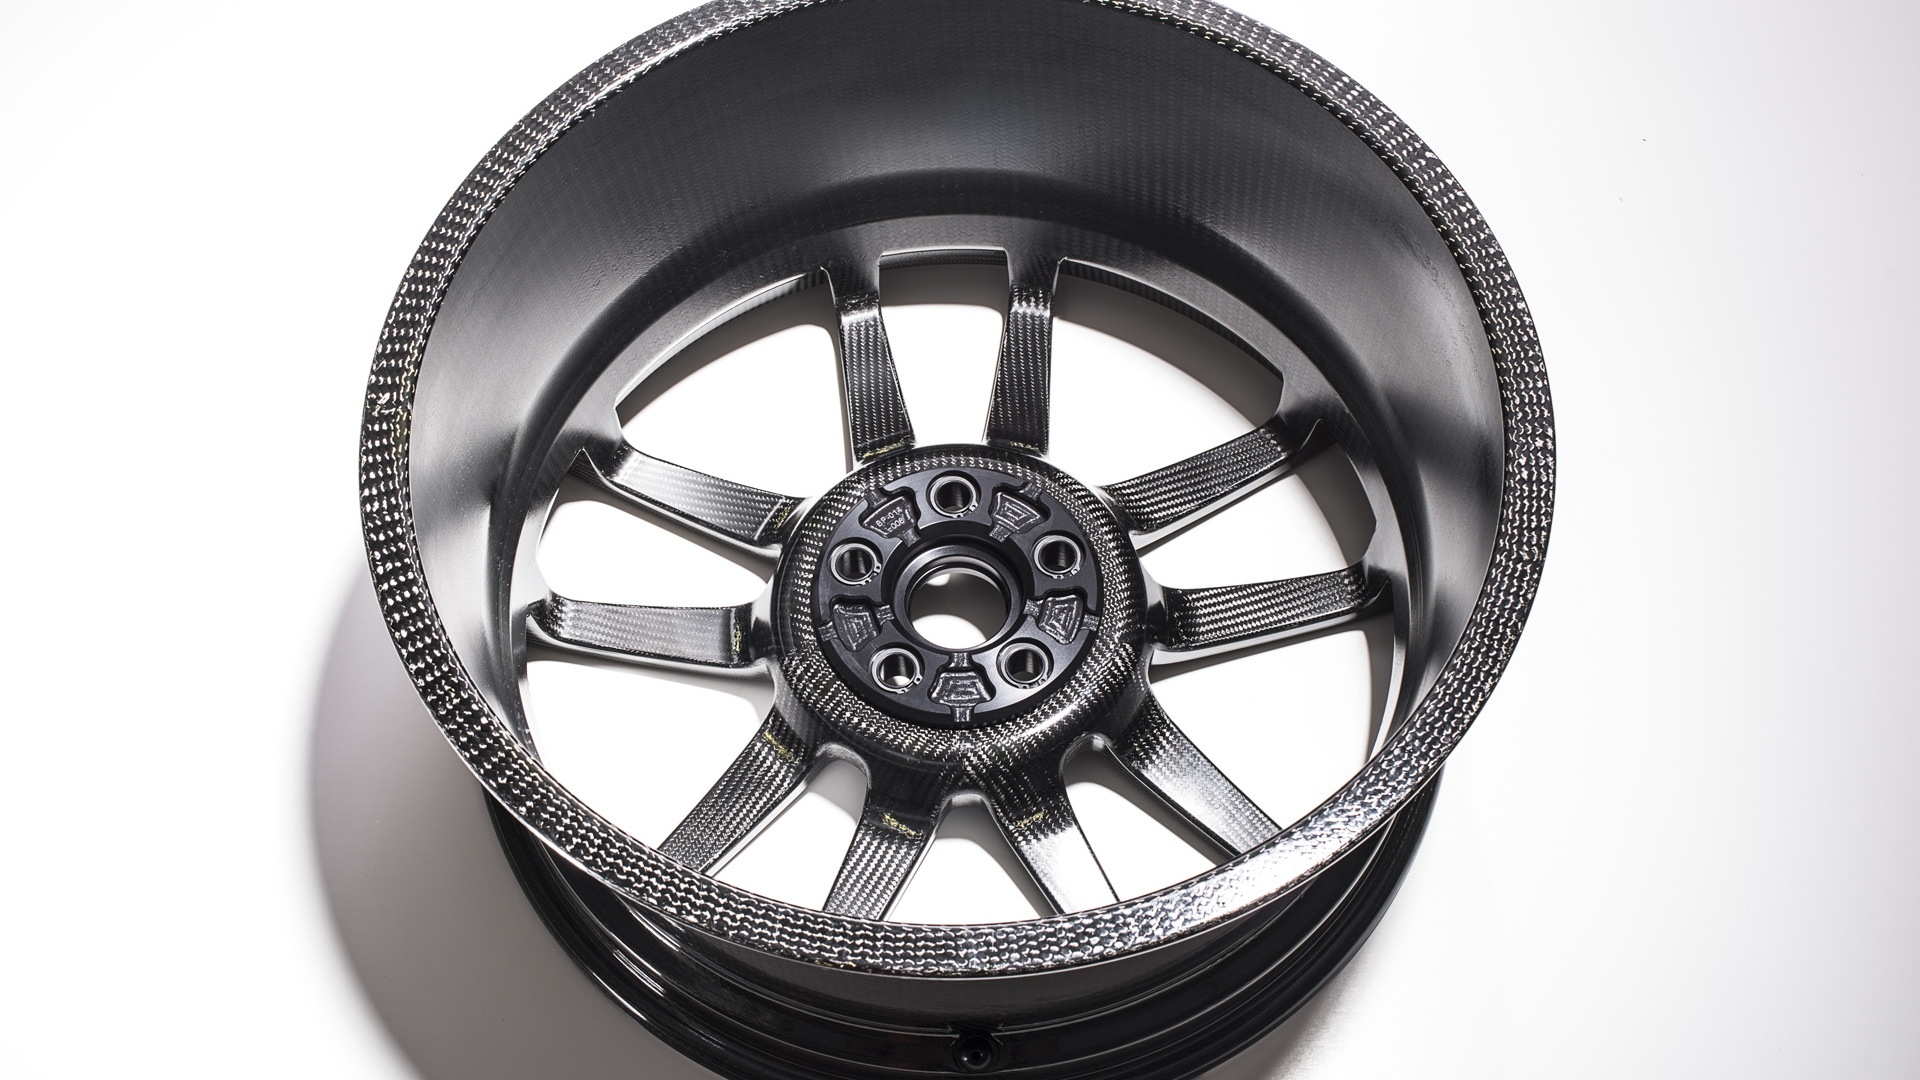 Ford GT’s carbon fiber wheels